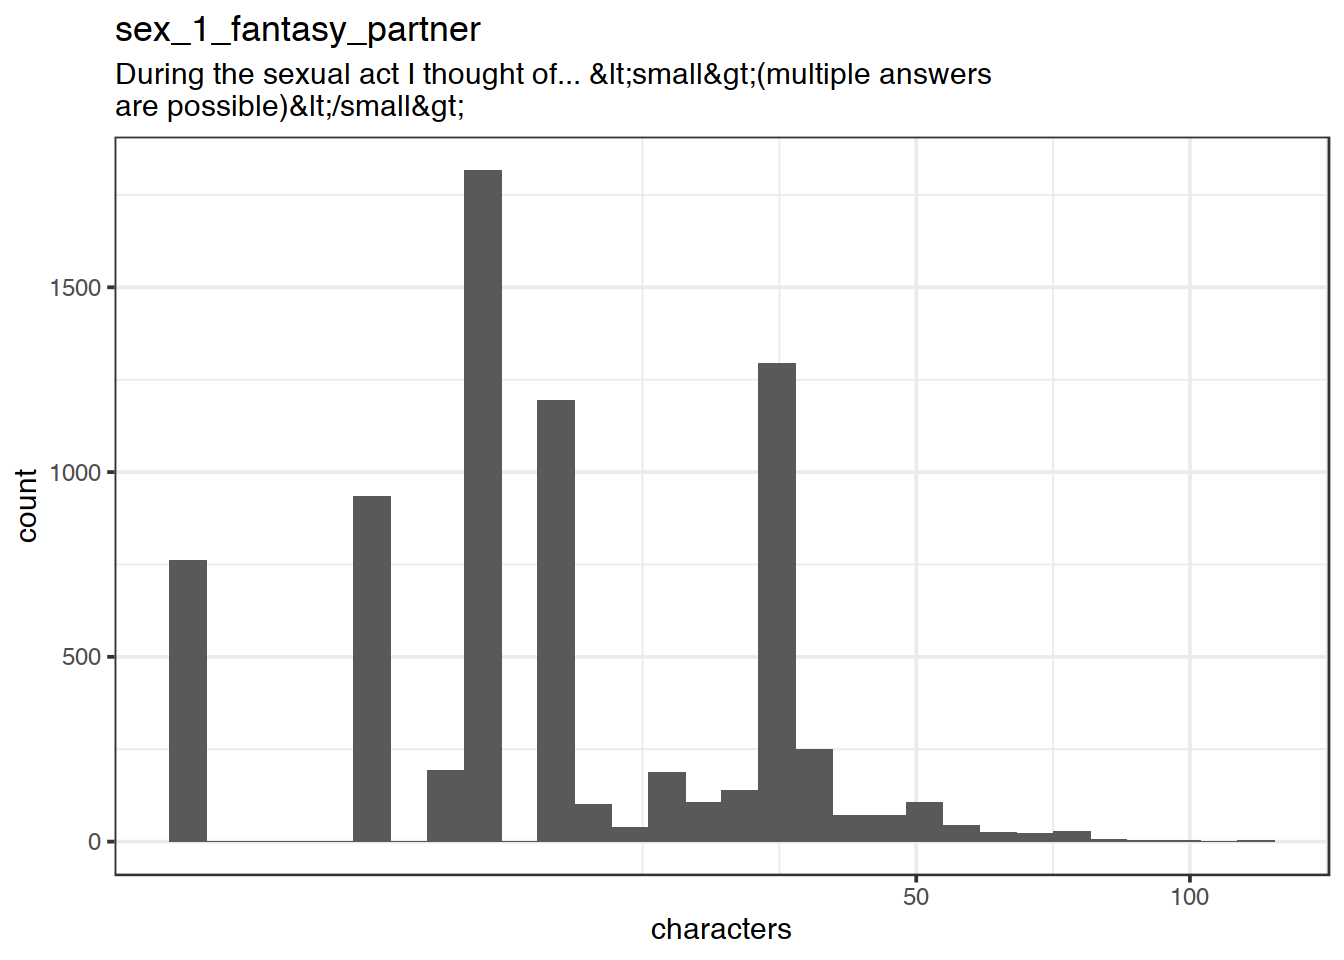 Distribution of values for sex_1_fantasy_partner